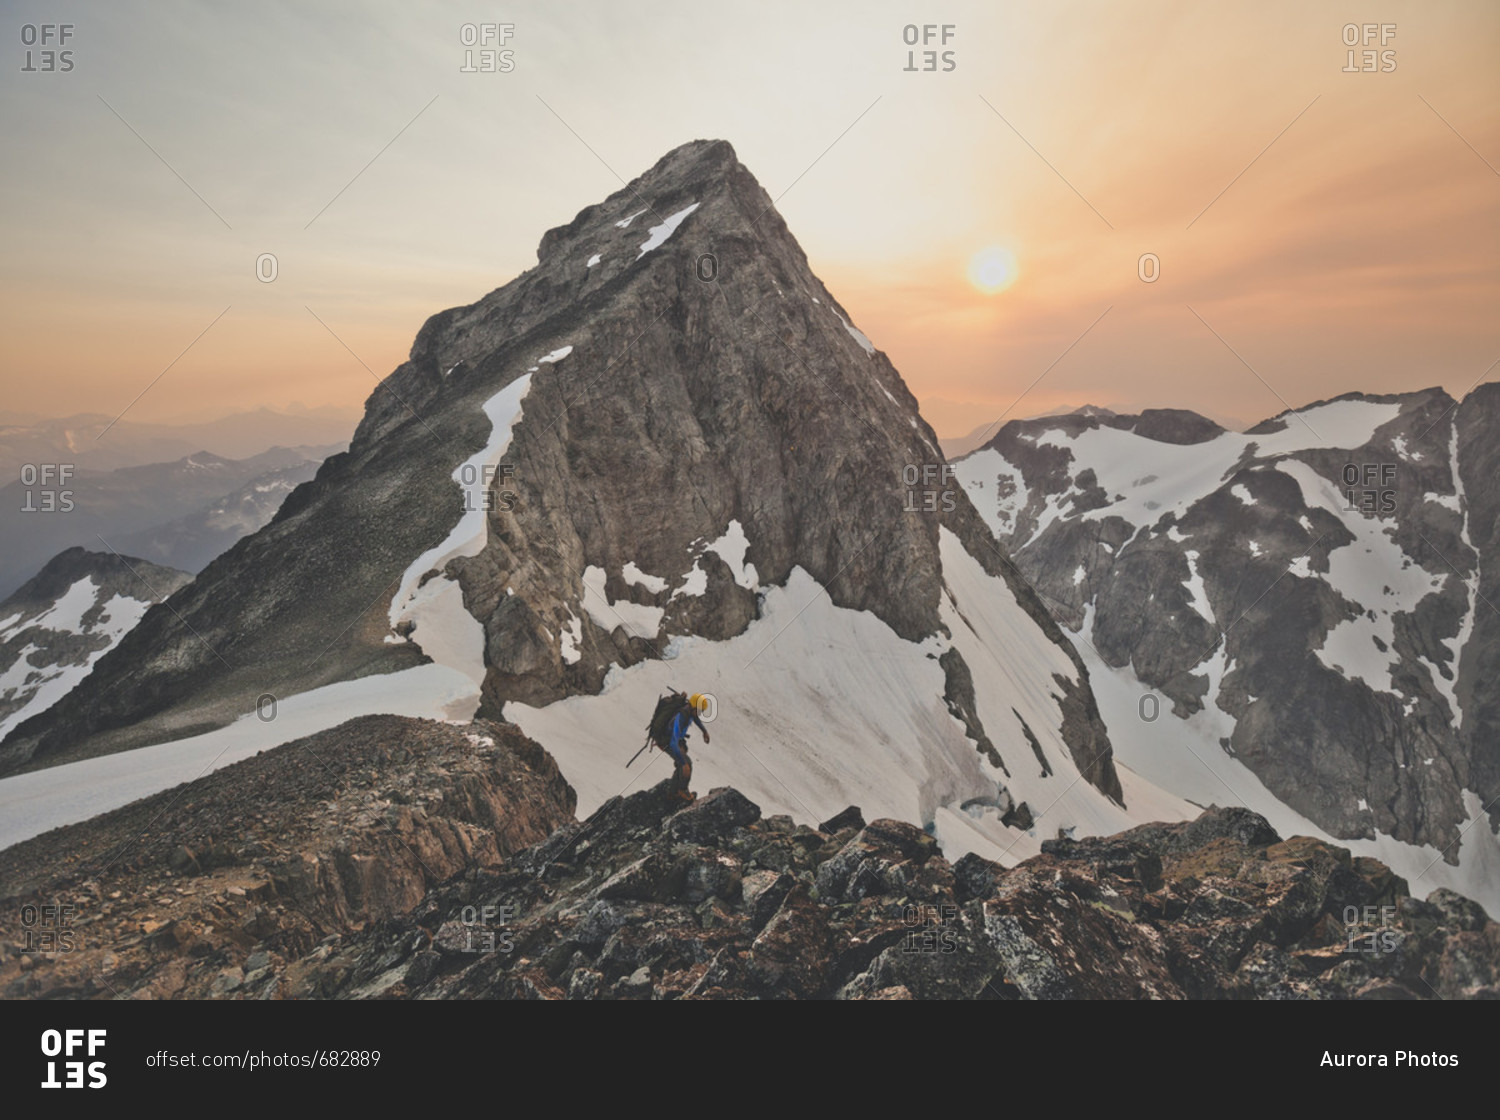 Mountain climber near peak of Ashlu Mountain, Coast Mountain Range, Squamish, British Columbia, Canada